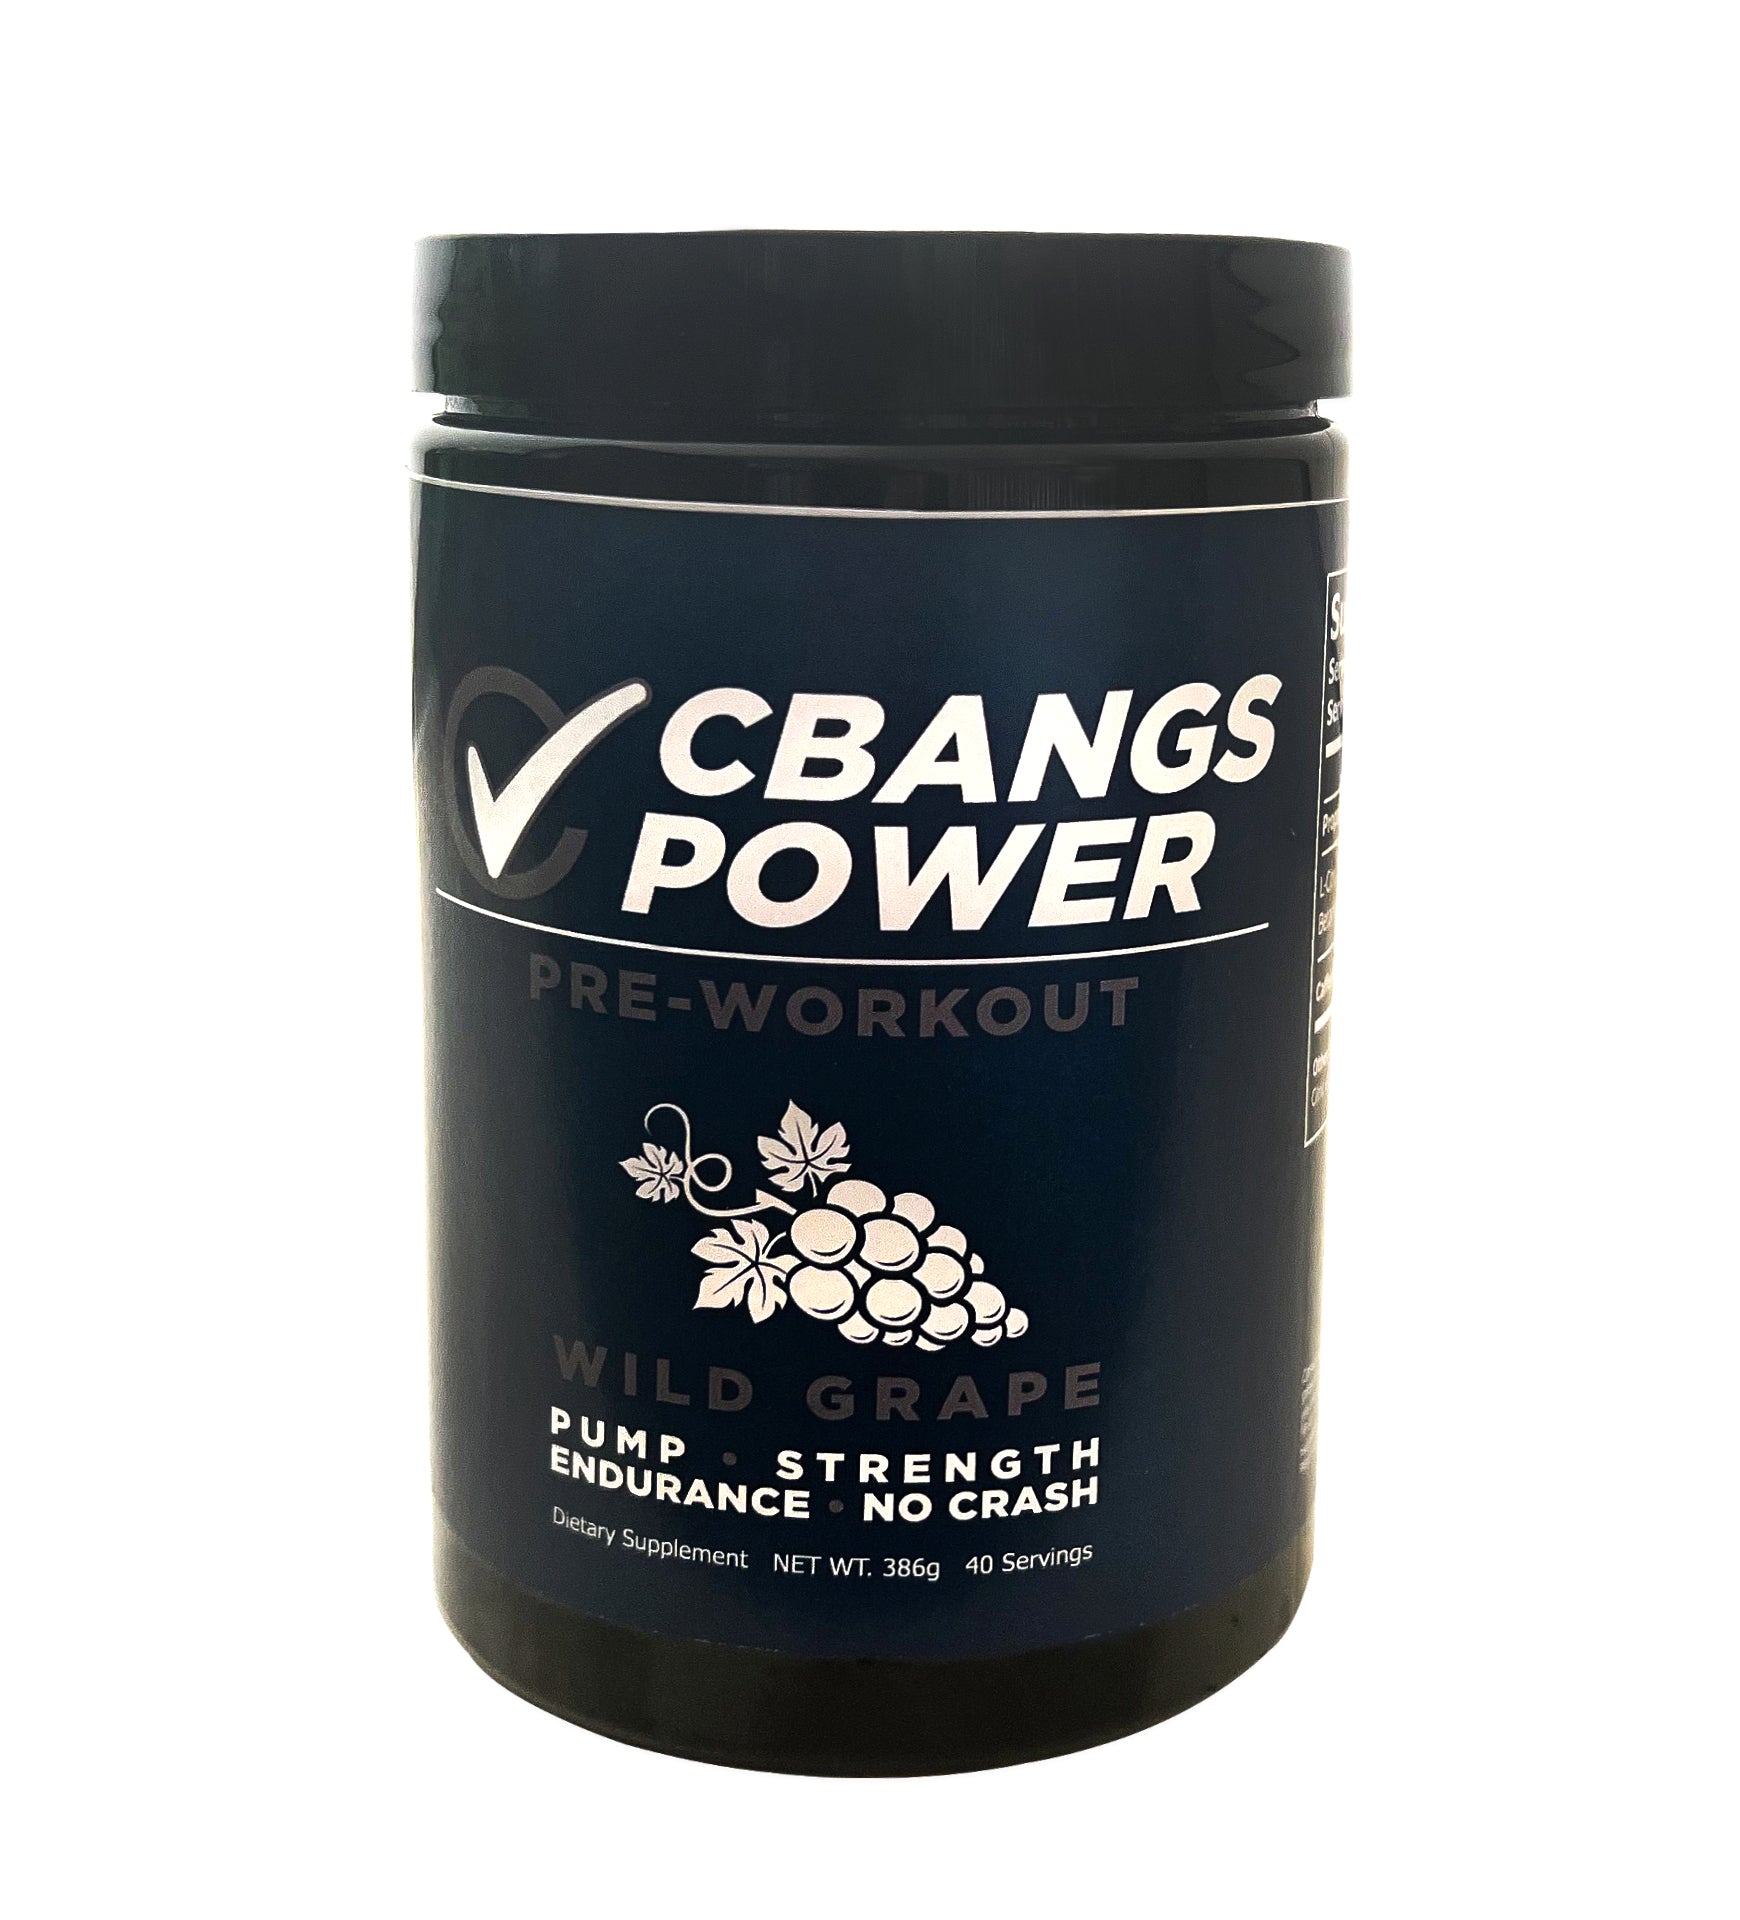 CBANG's Power Pre-Workout